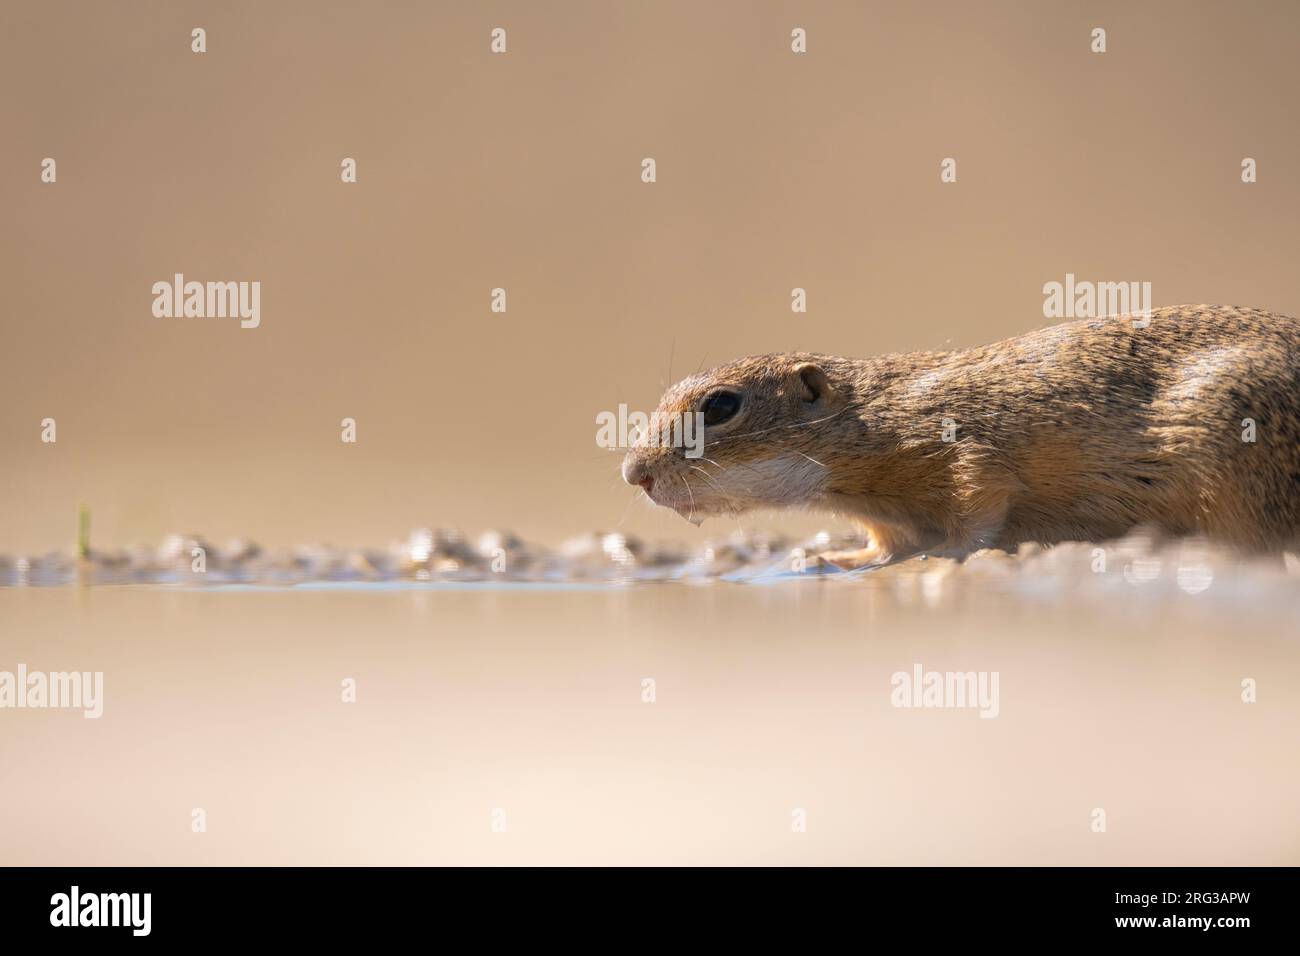 European Souslik (Spermophilus citellus) in Hungary. Also known as European ground squirrel. Drinking water. Stock Photo